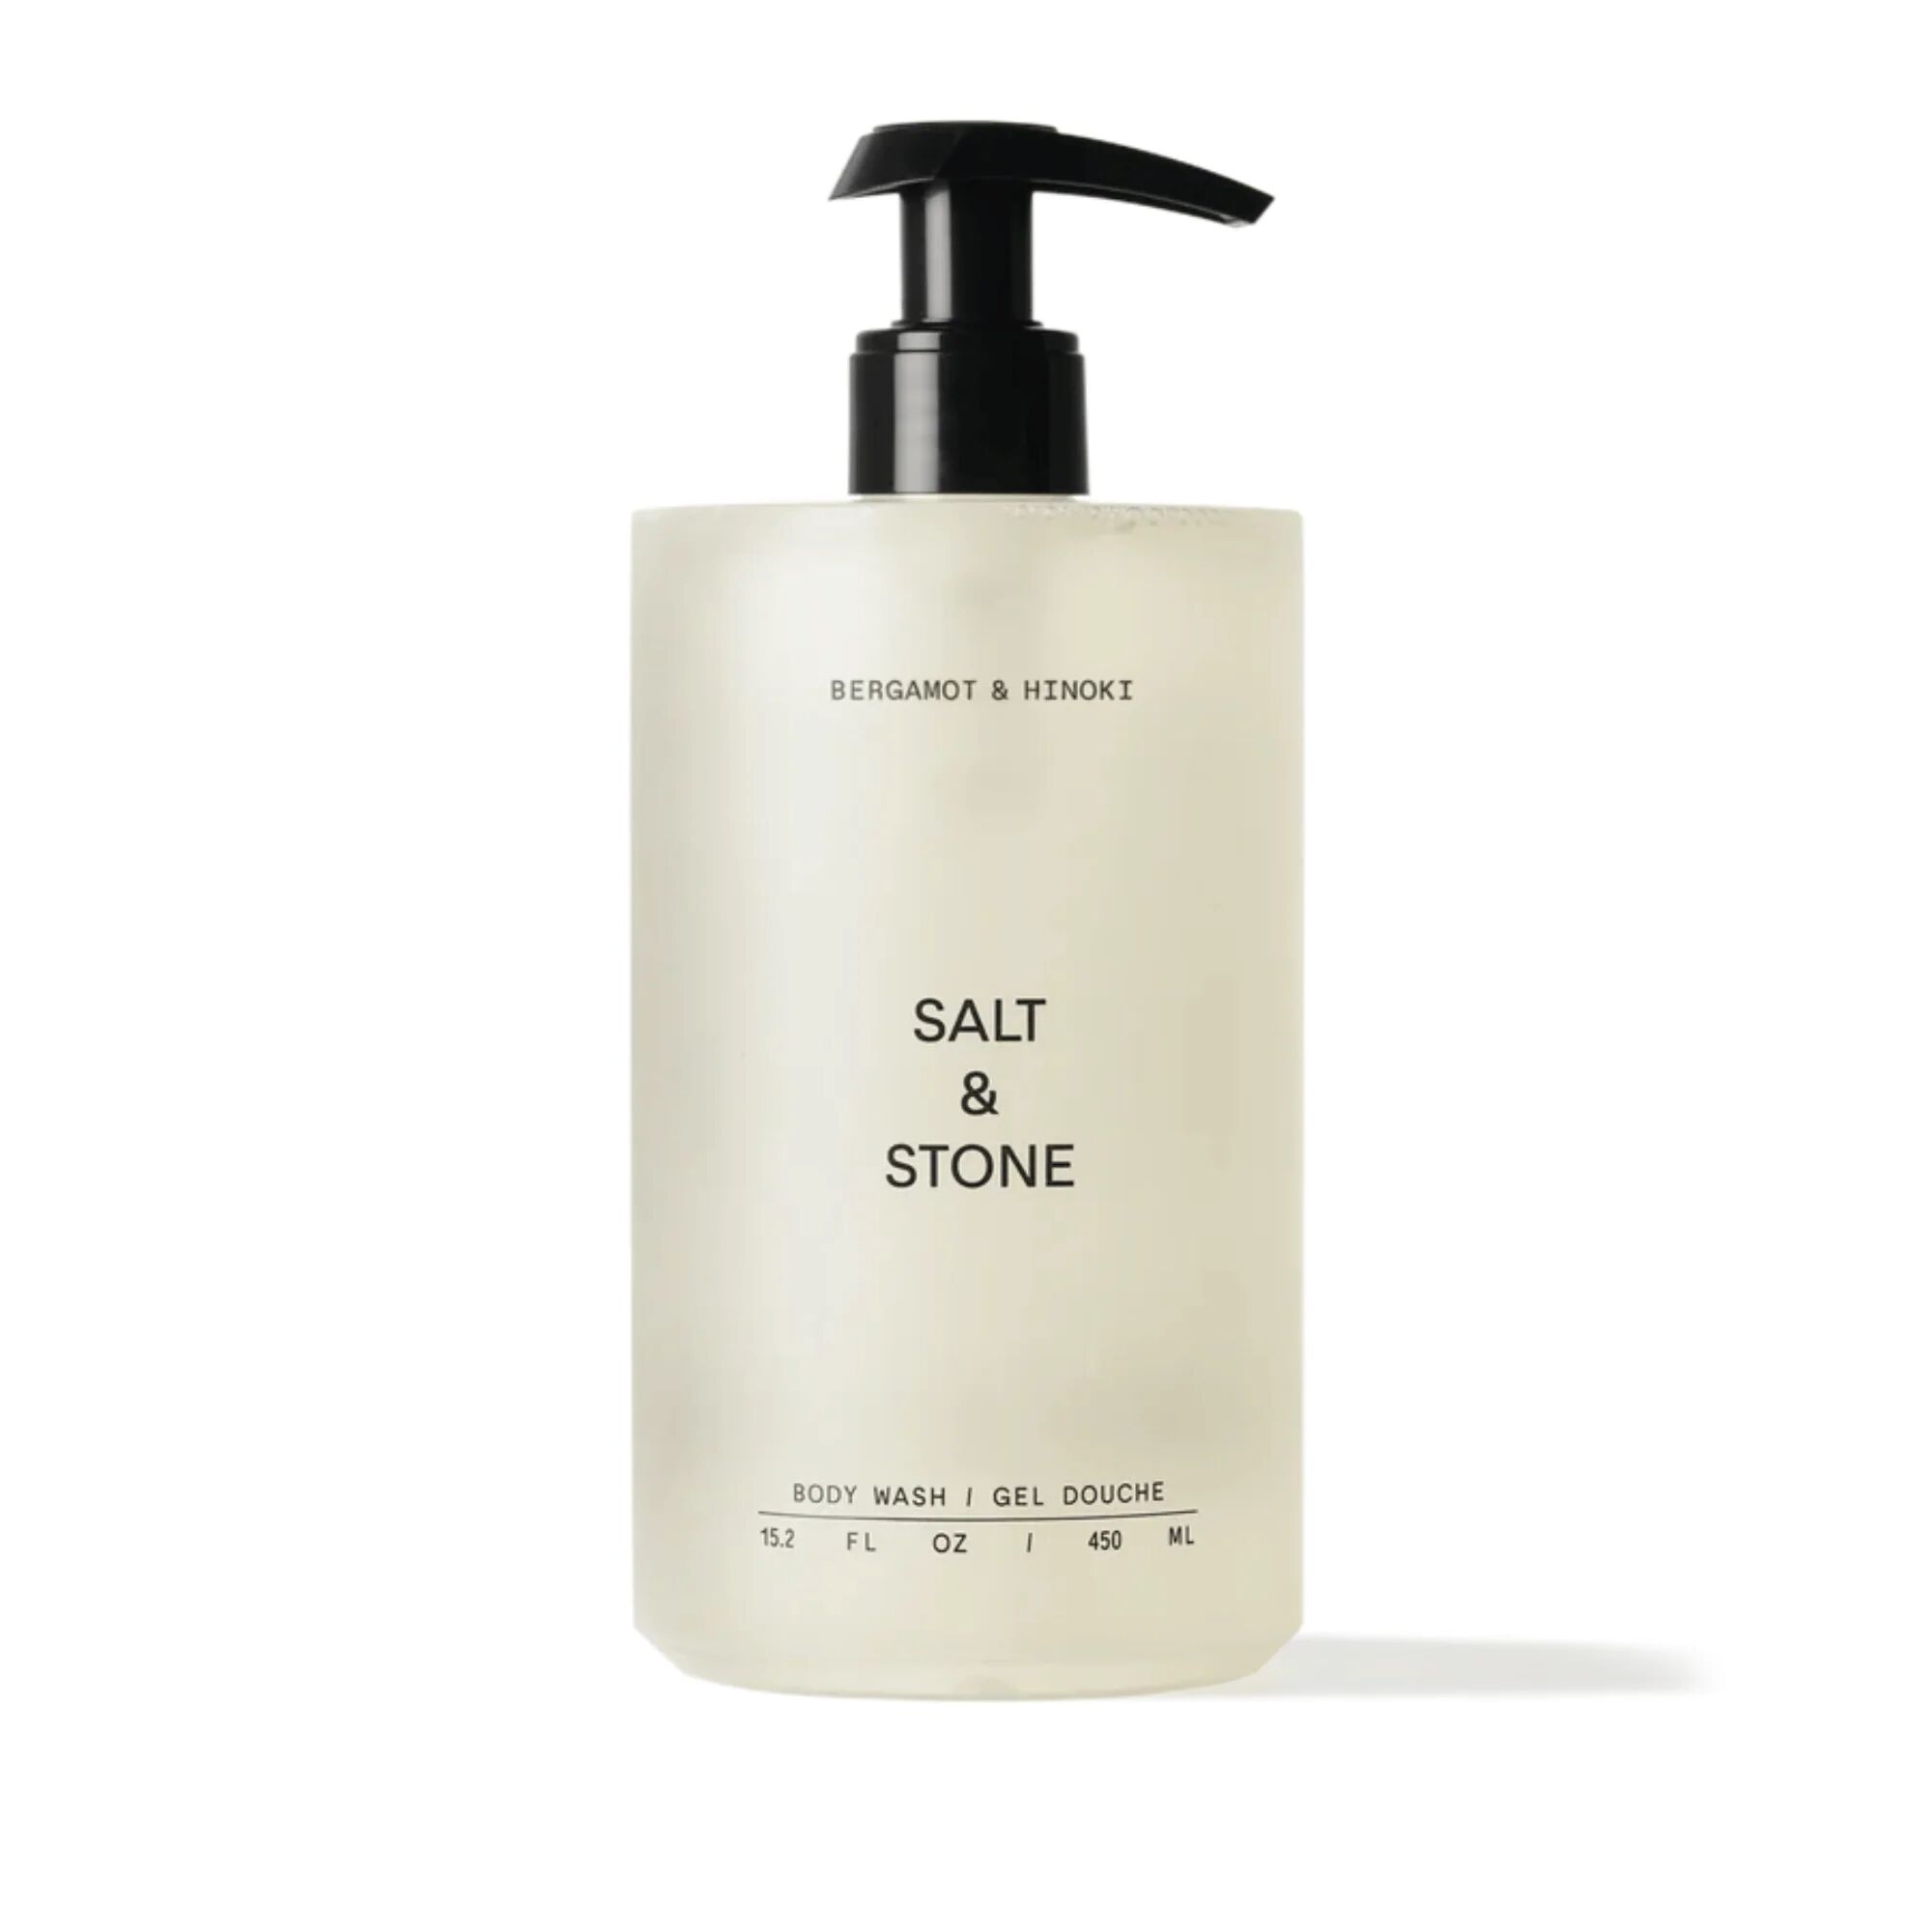 Salt & Stone Bergamot and Hinoki Body Wash (15.2 fl oz) #10084250